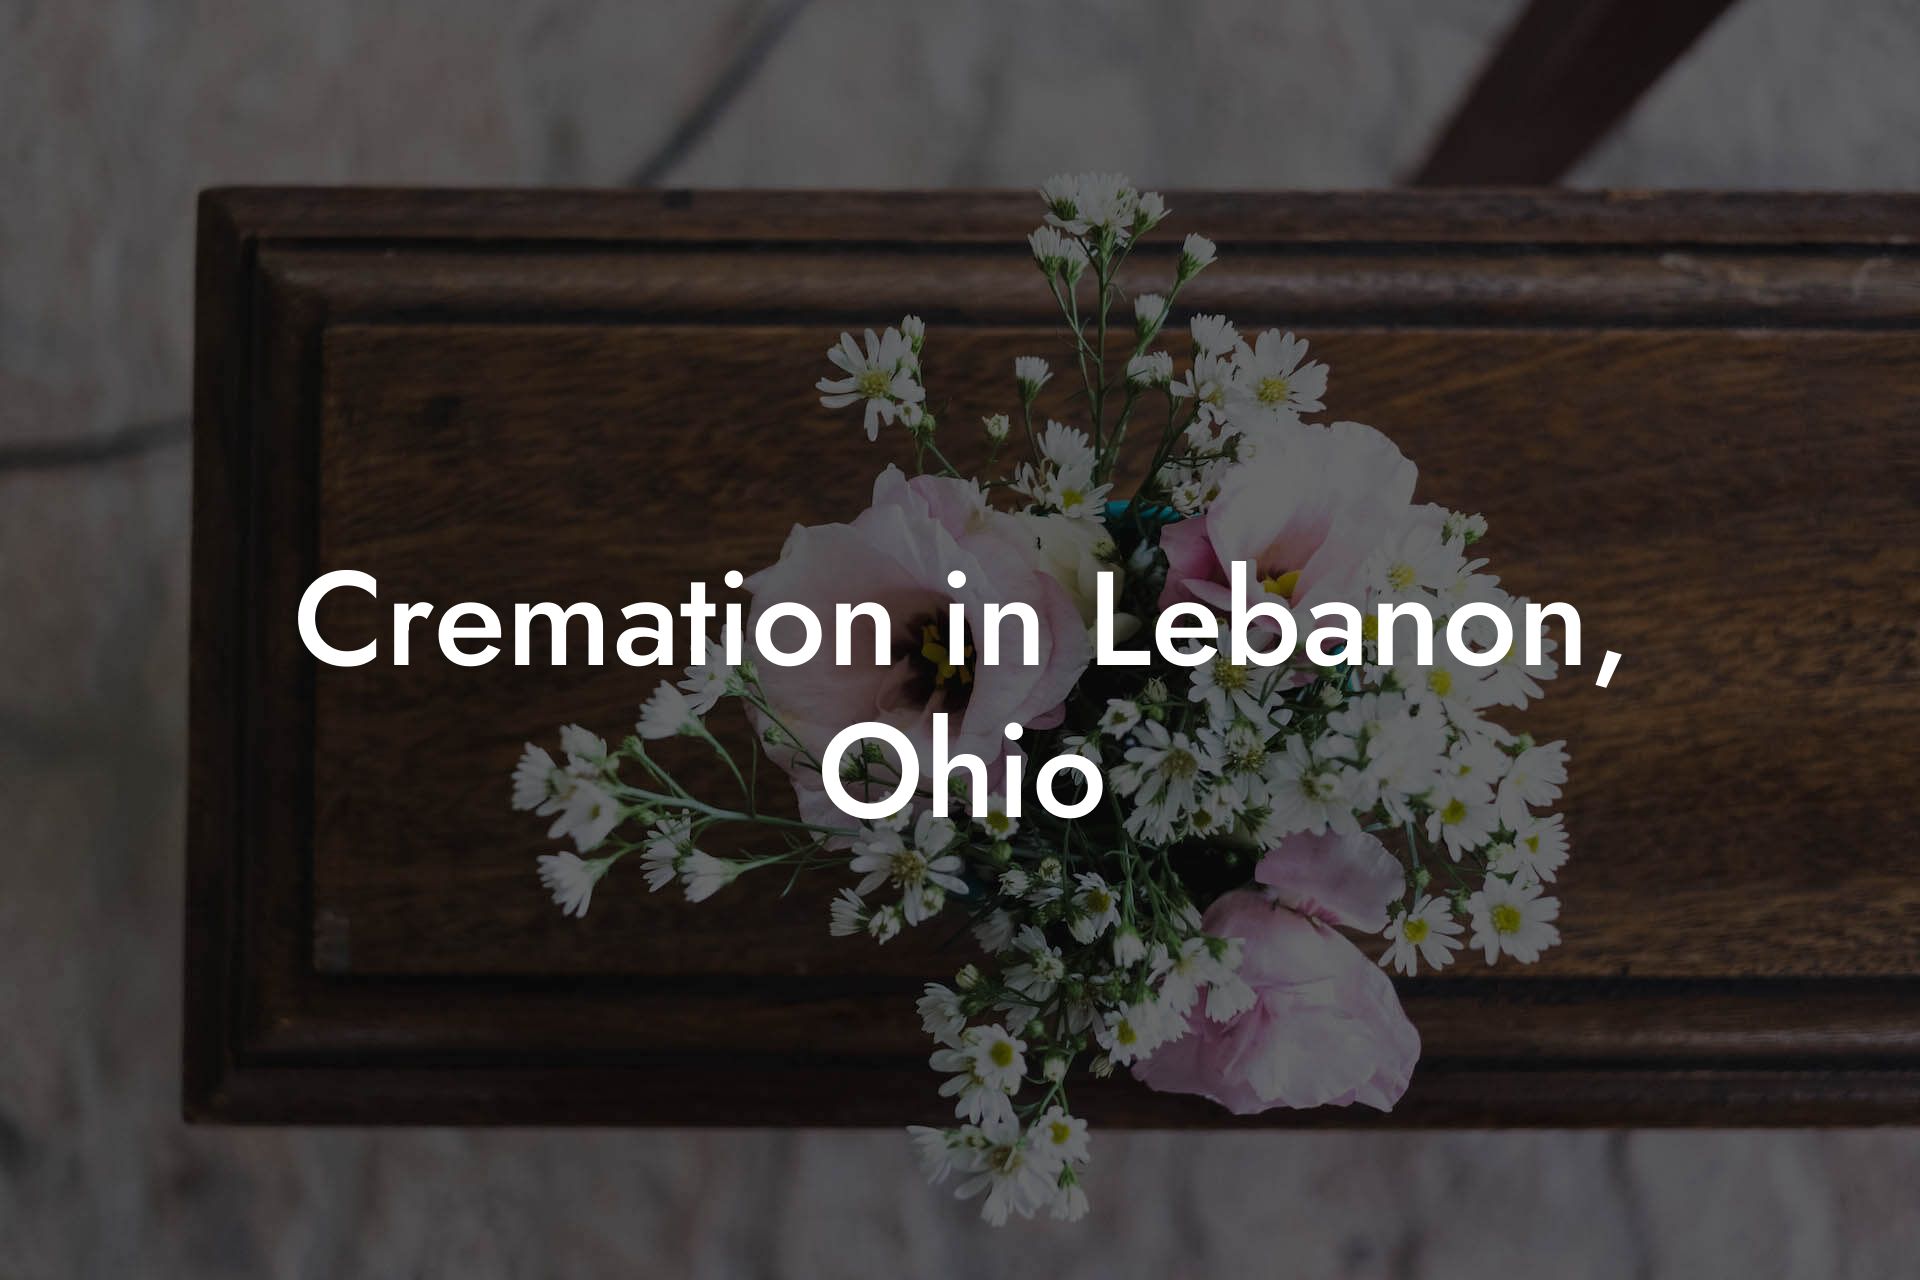 Cremation in Lebanon, Ohio